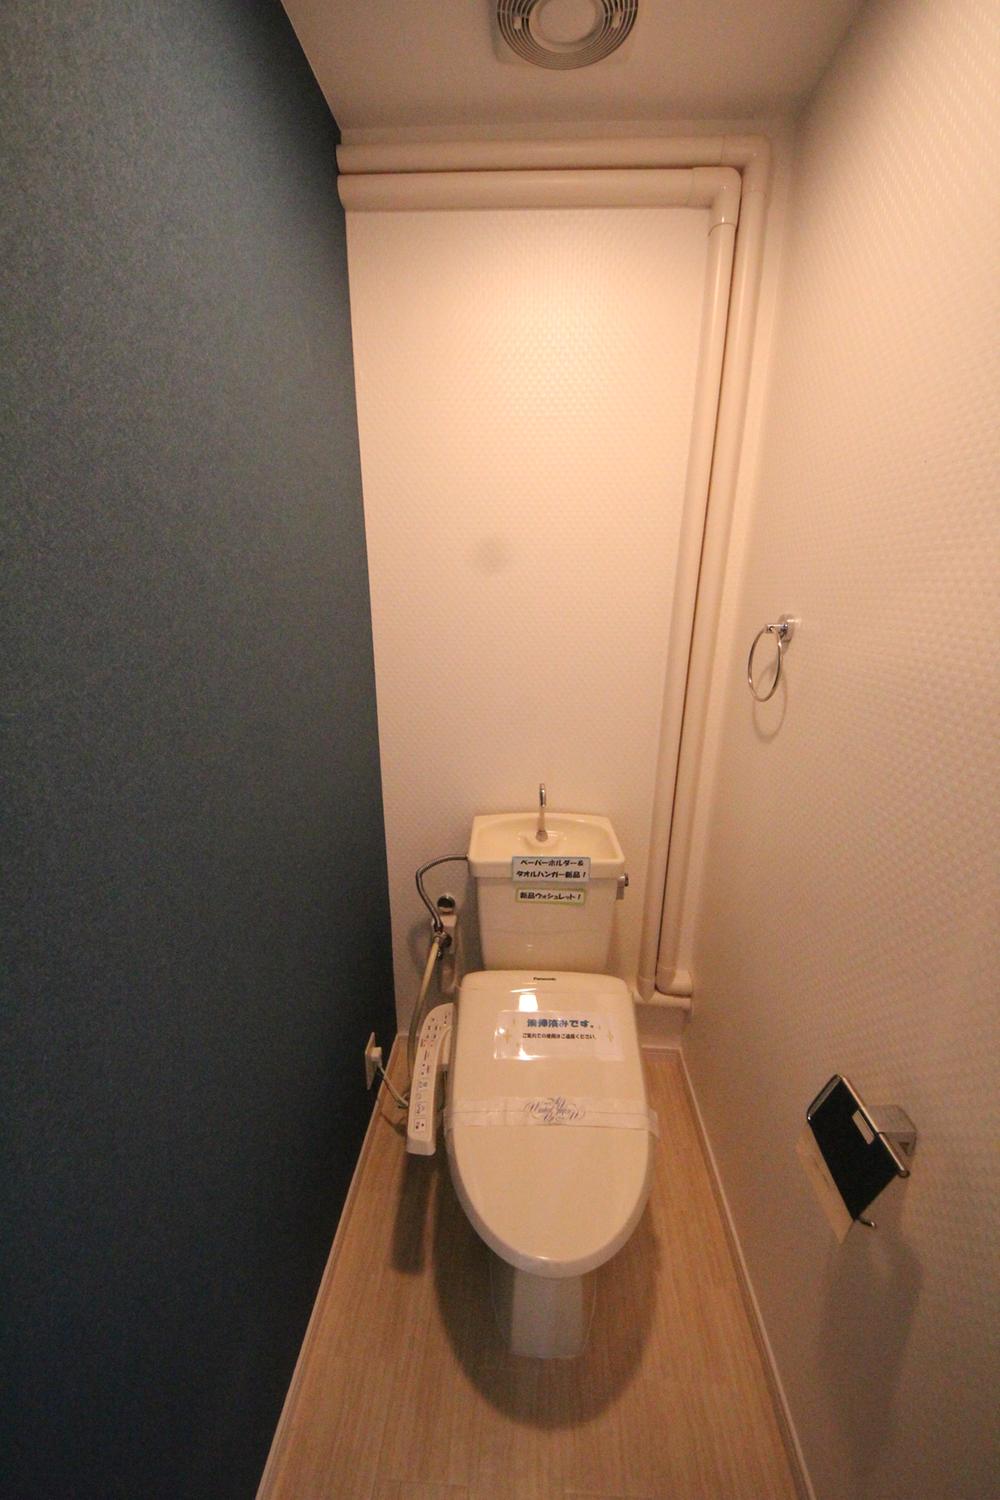 Toilet. (October 2013) Shooting